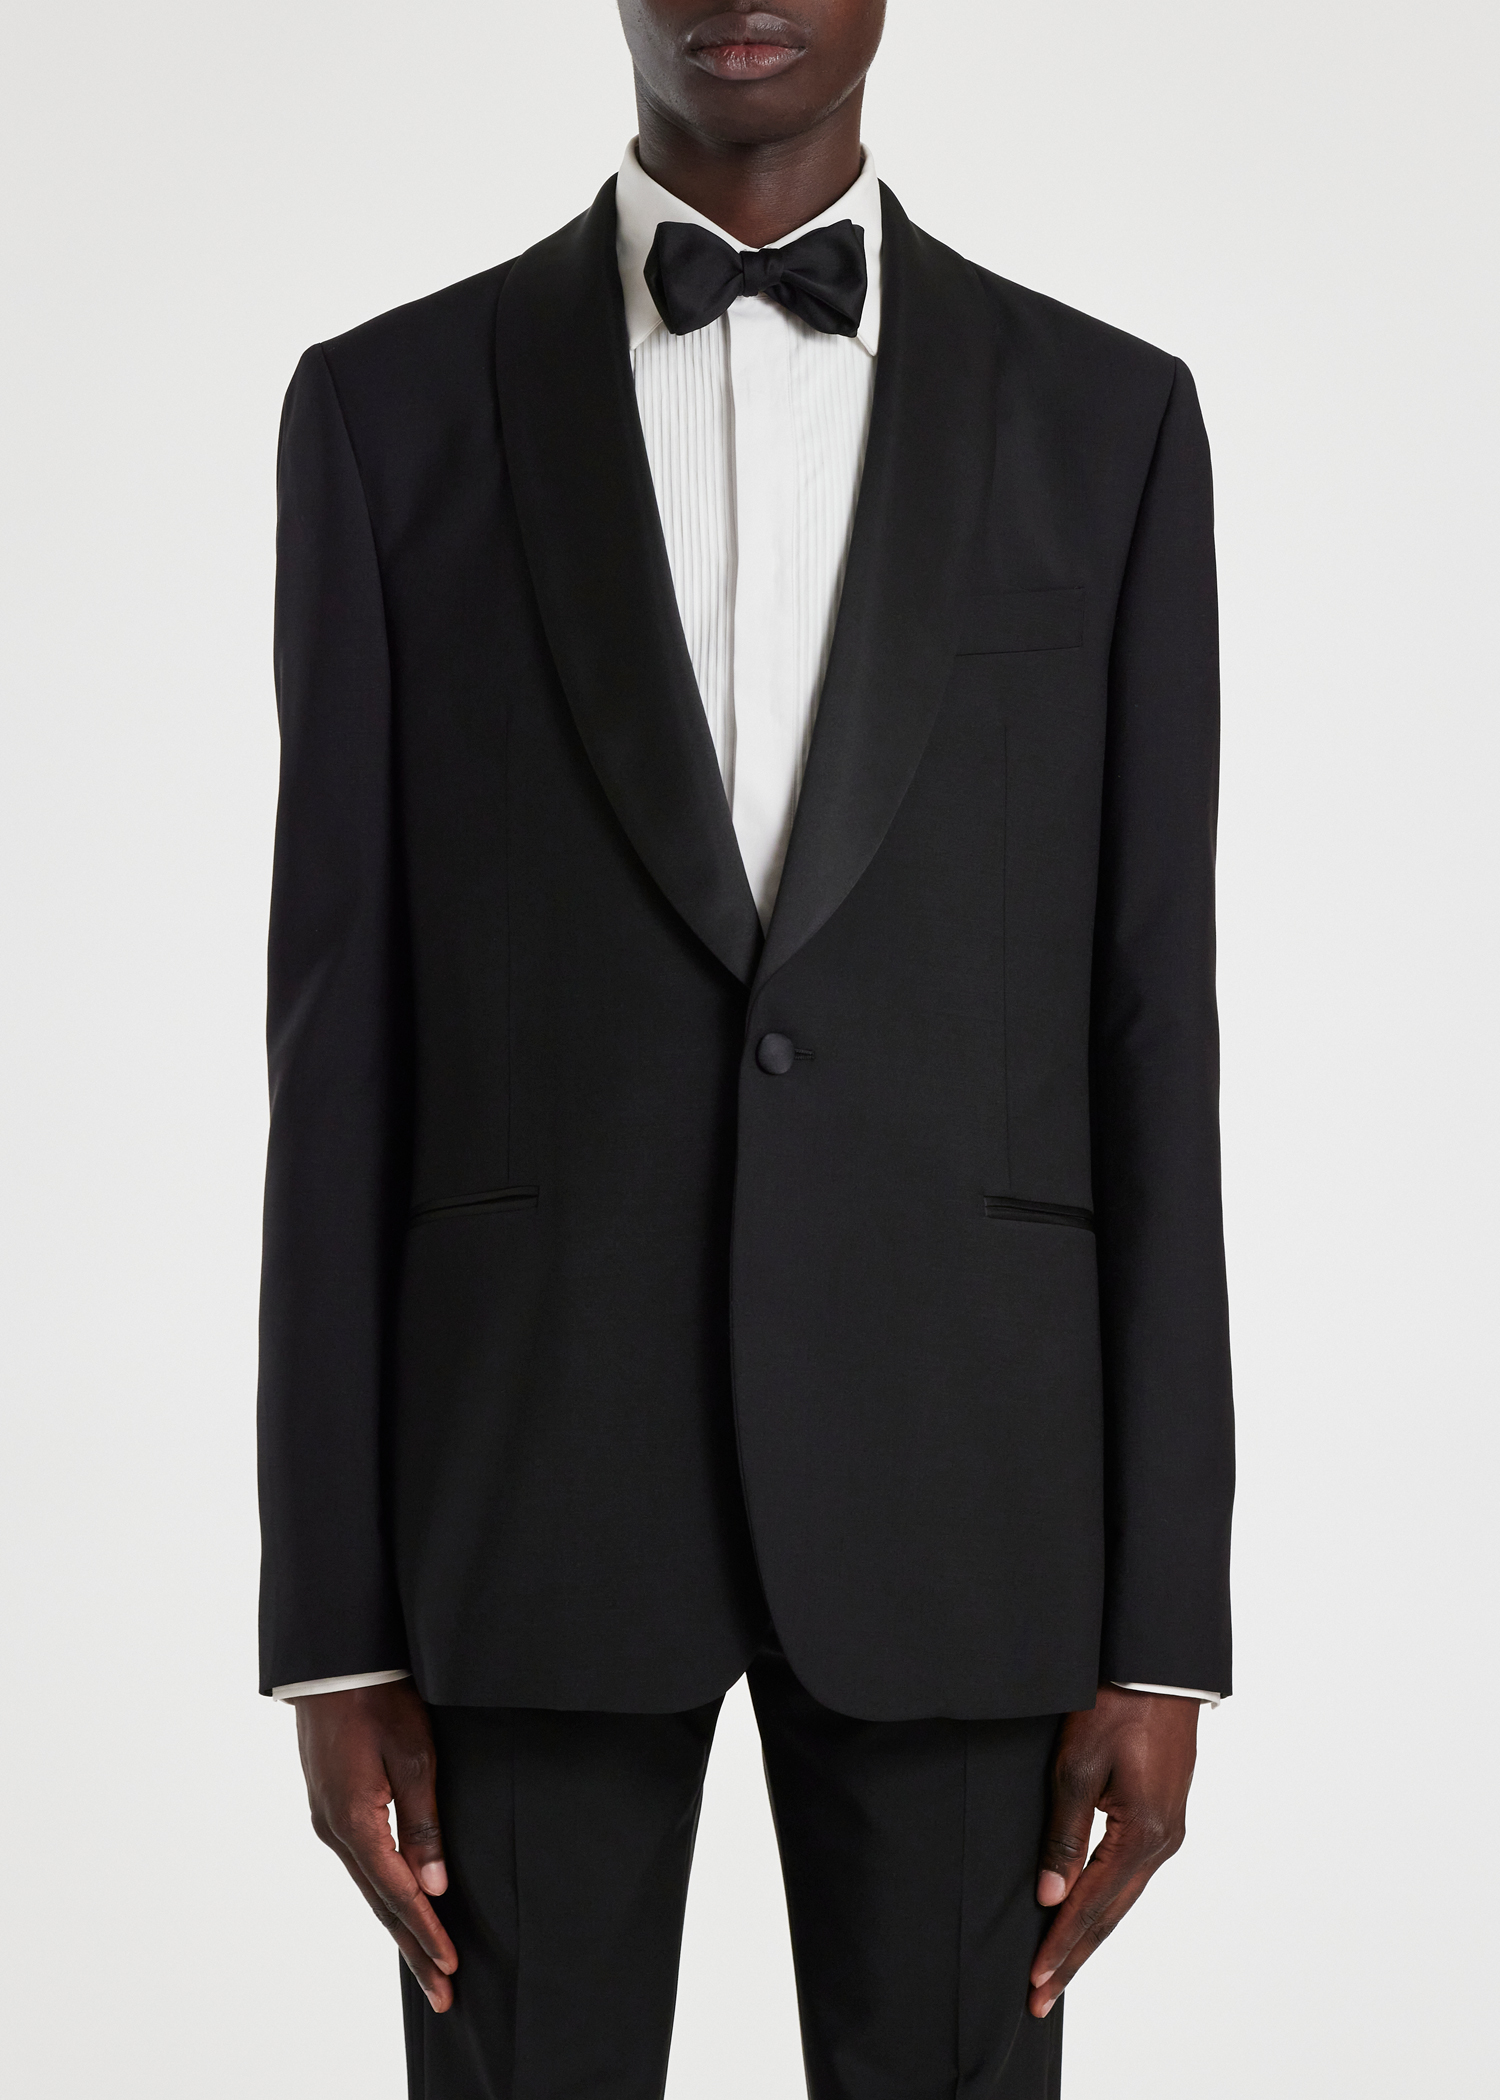 Designer Black Suits for Men | Paul Smith